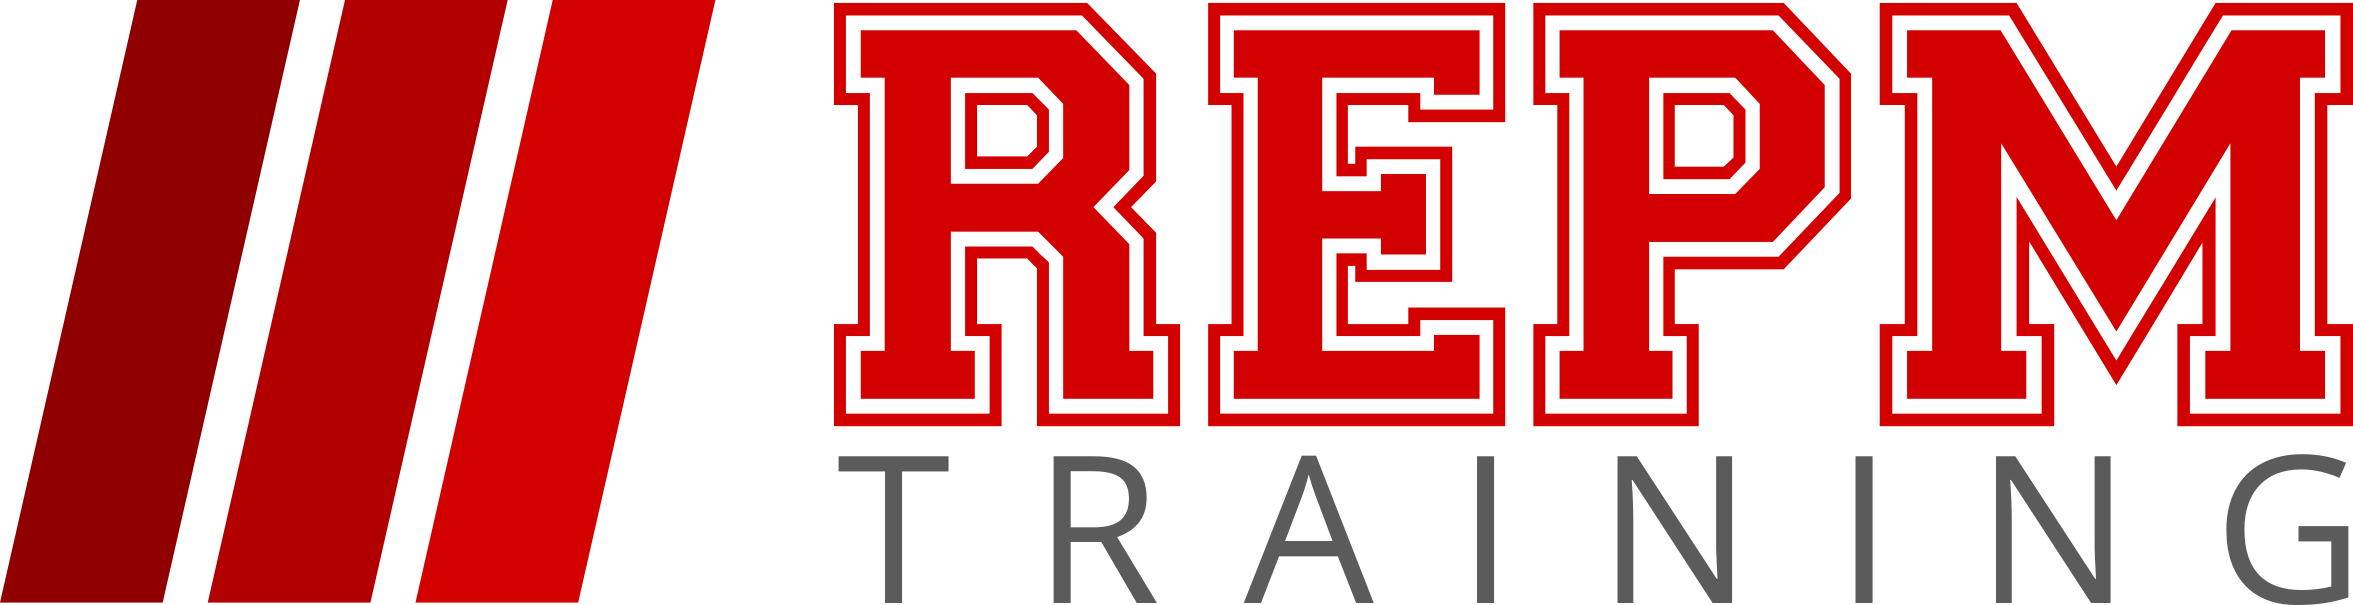 Re Project Management Training logo